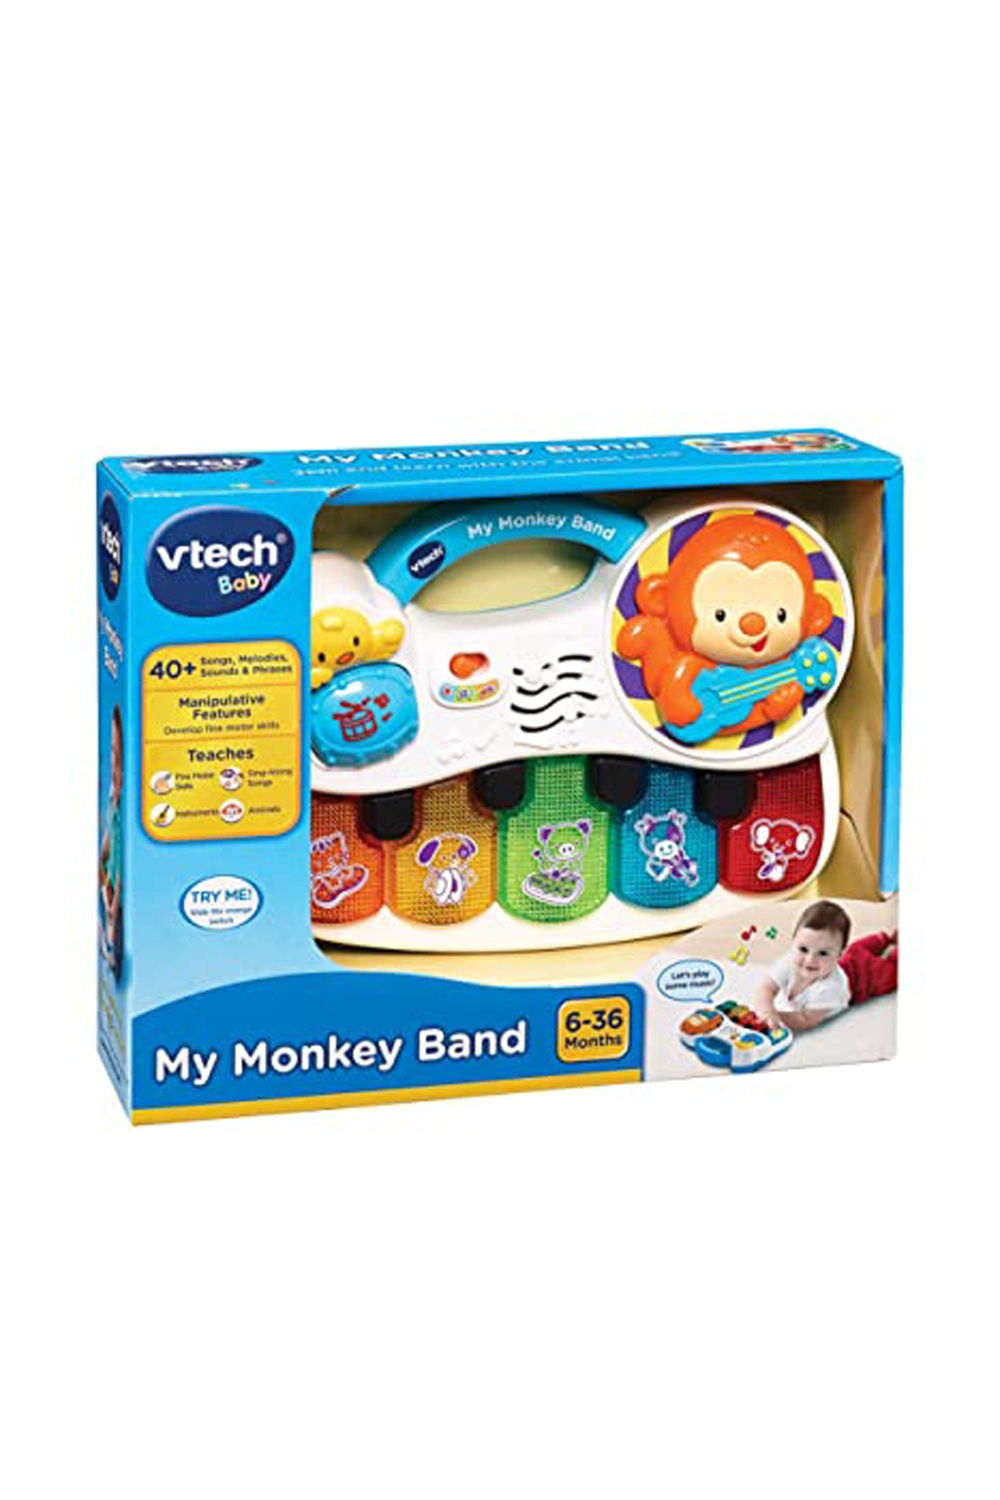 VTech Monkey Band Music Center 